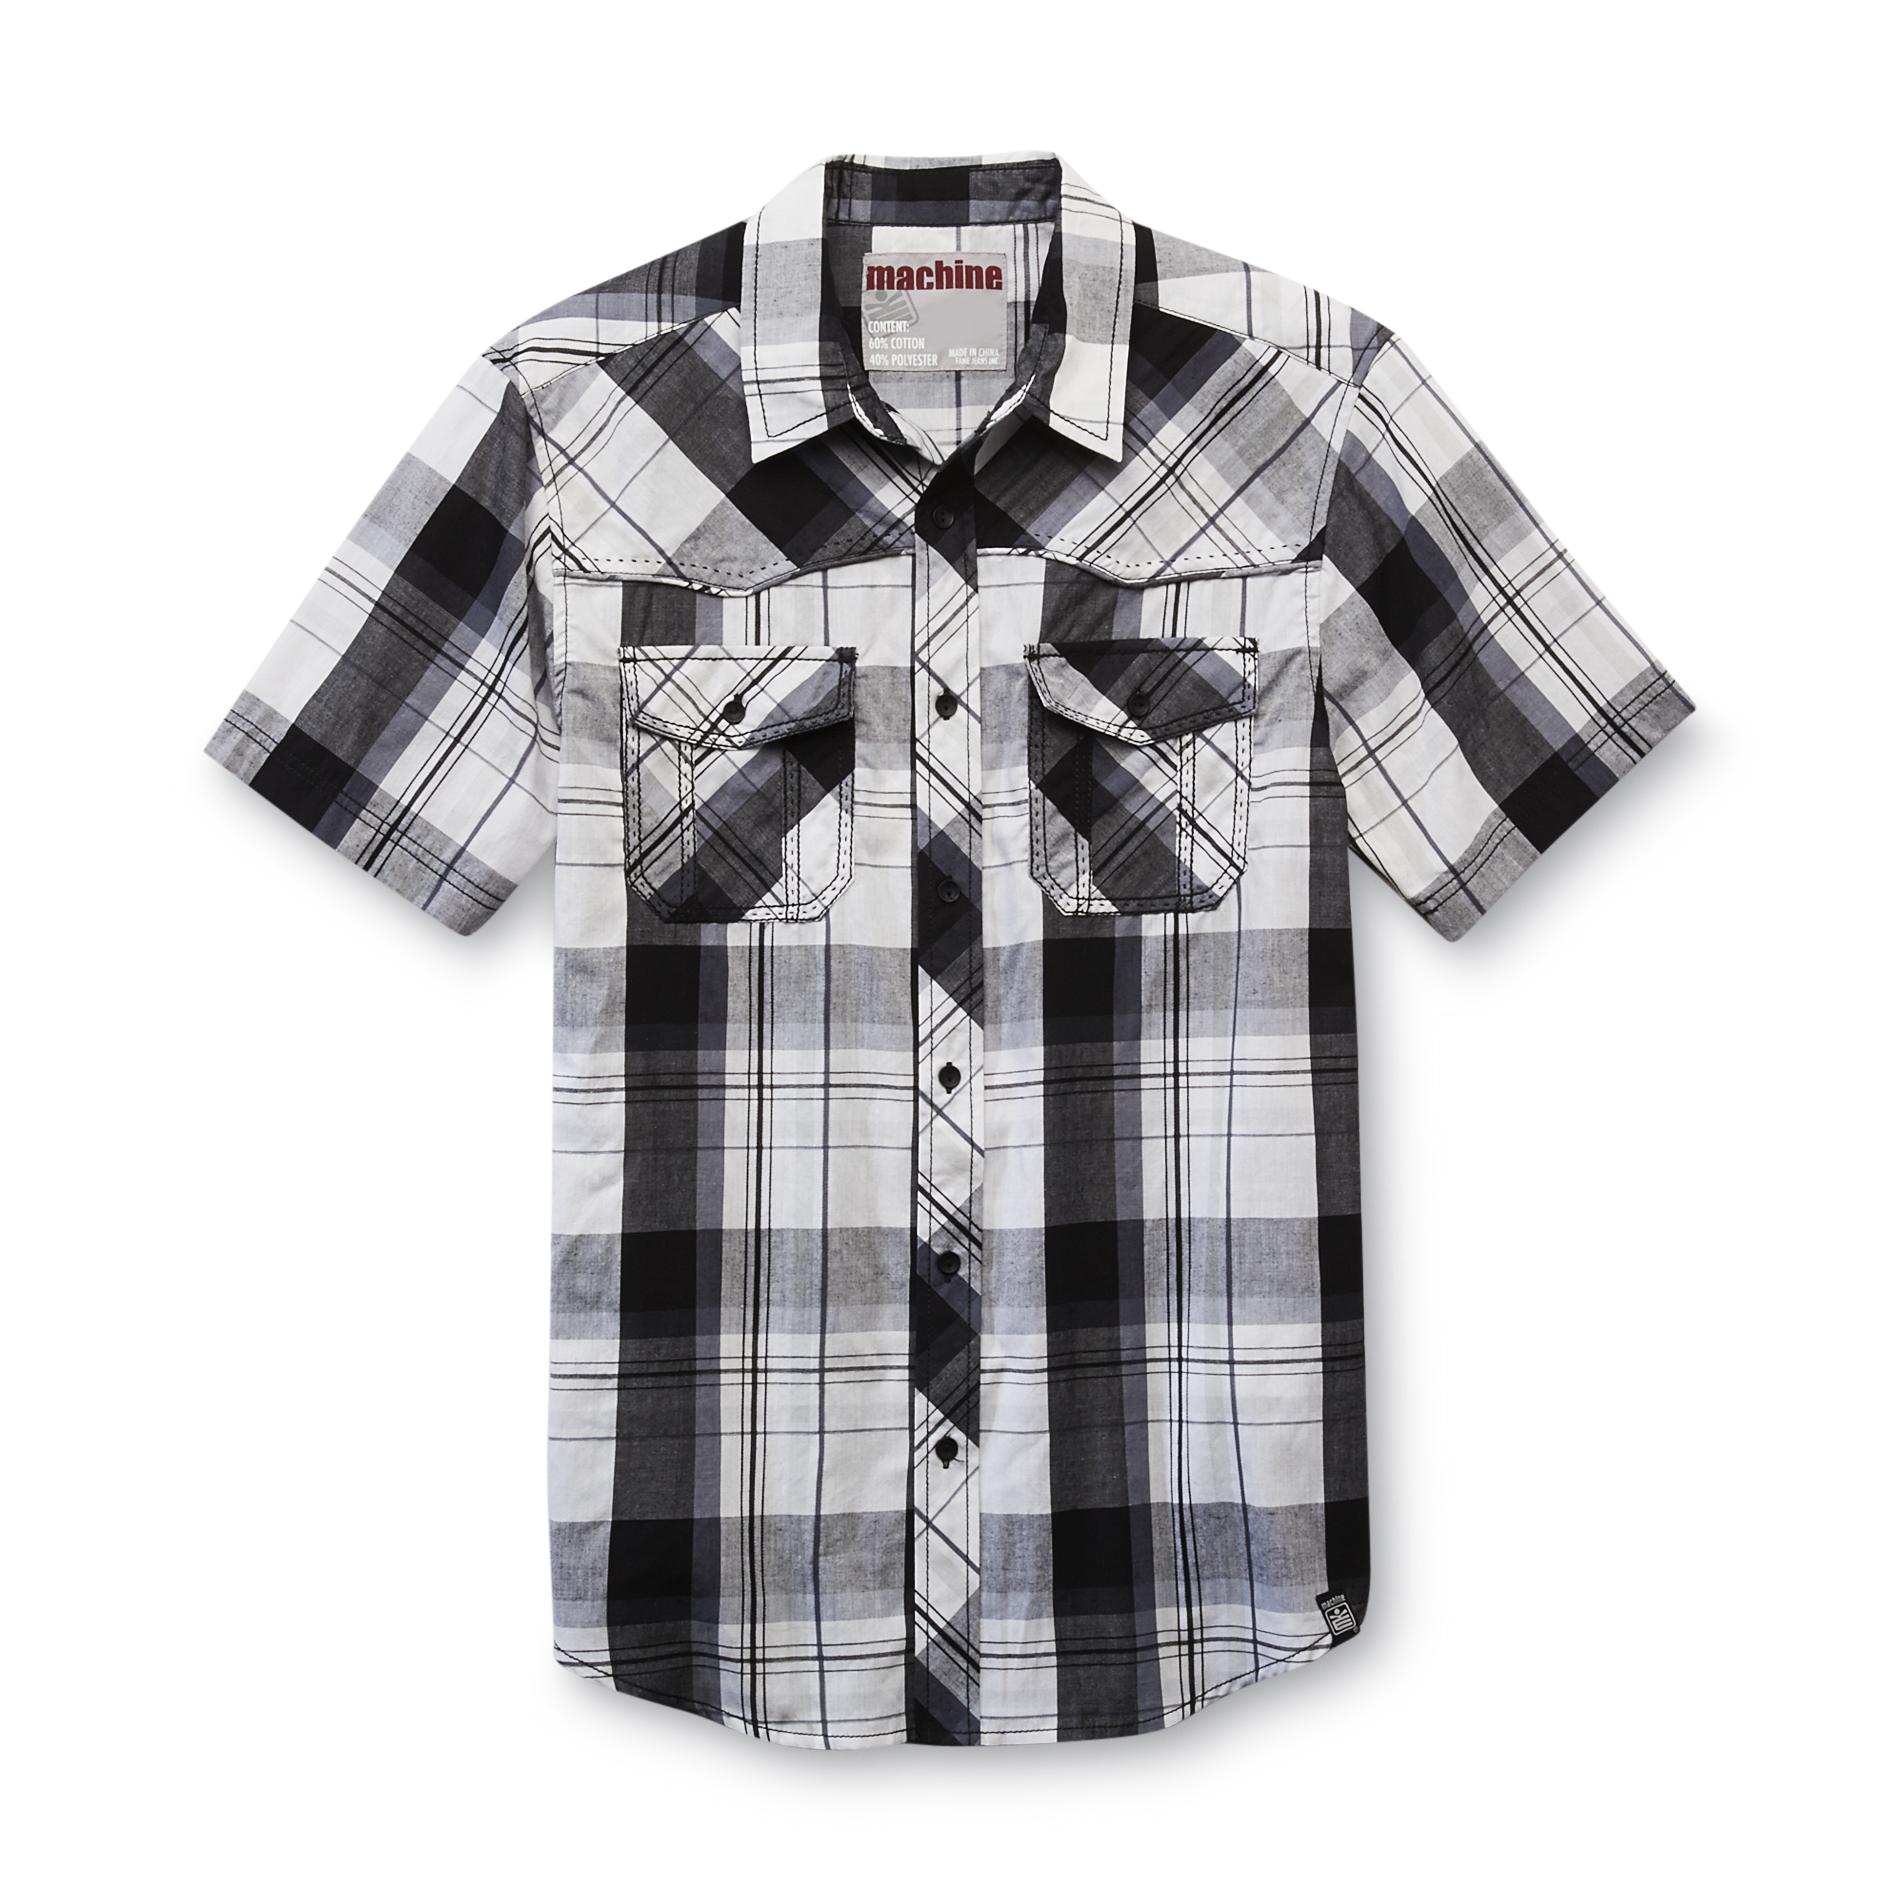 Overdrive Young Men's Modern Shirt - Plaid